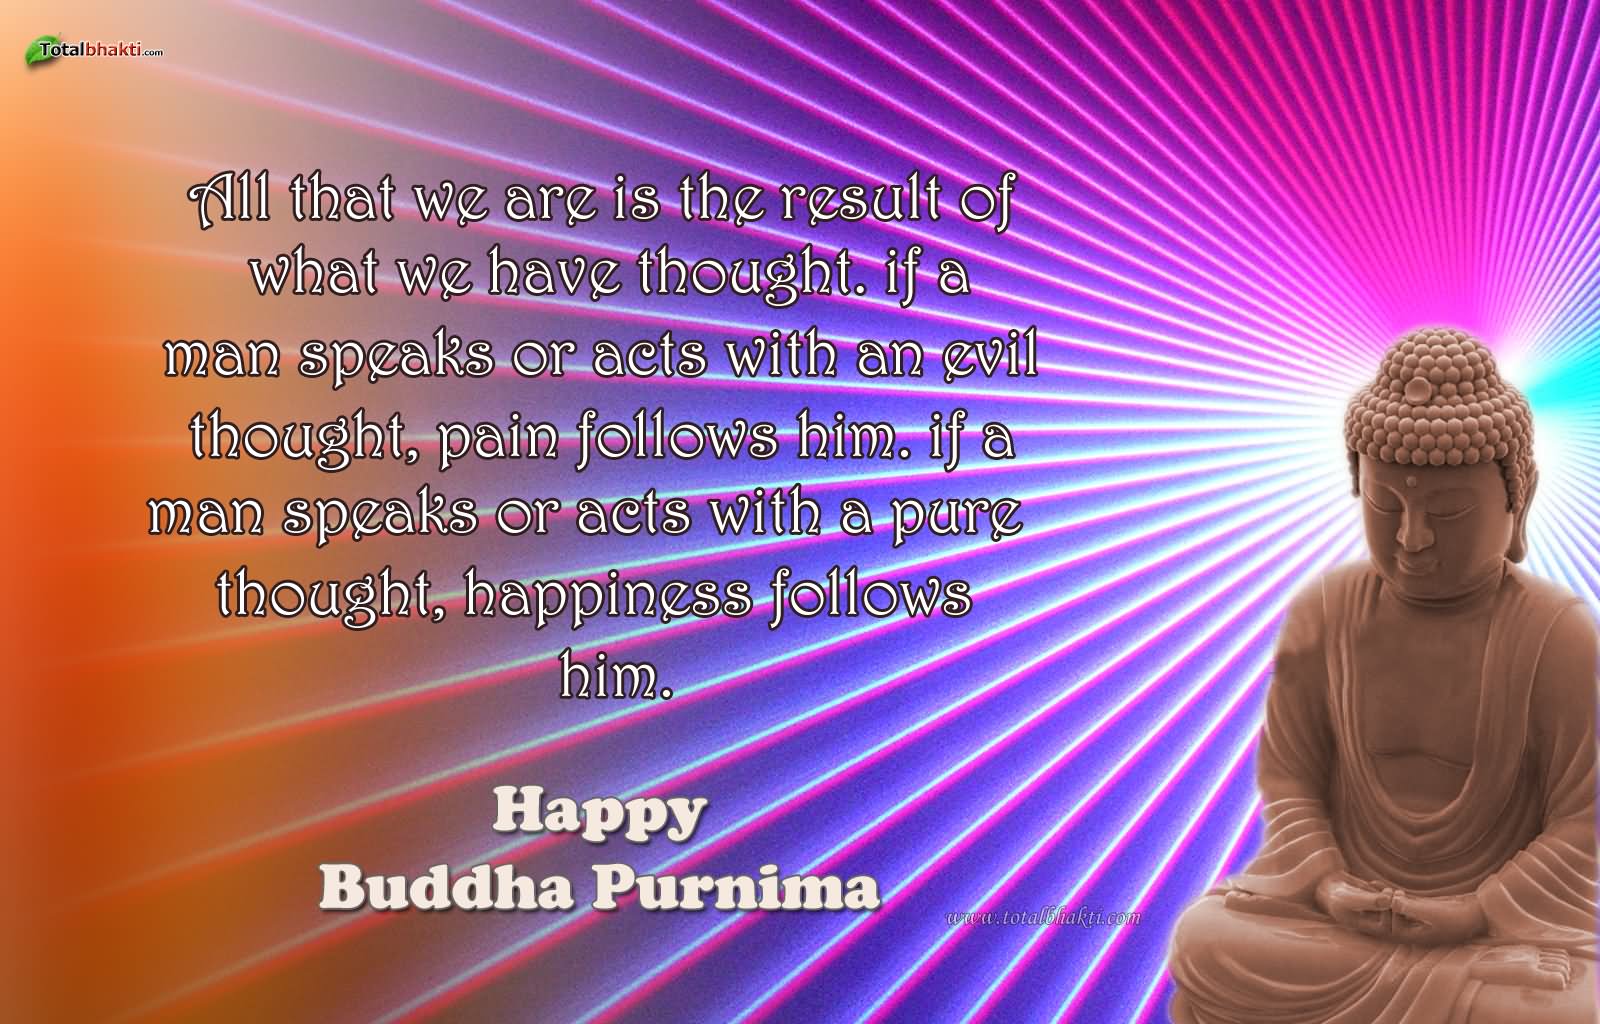 Buddha Purnima Wishes Wallpaper Image